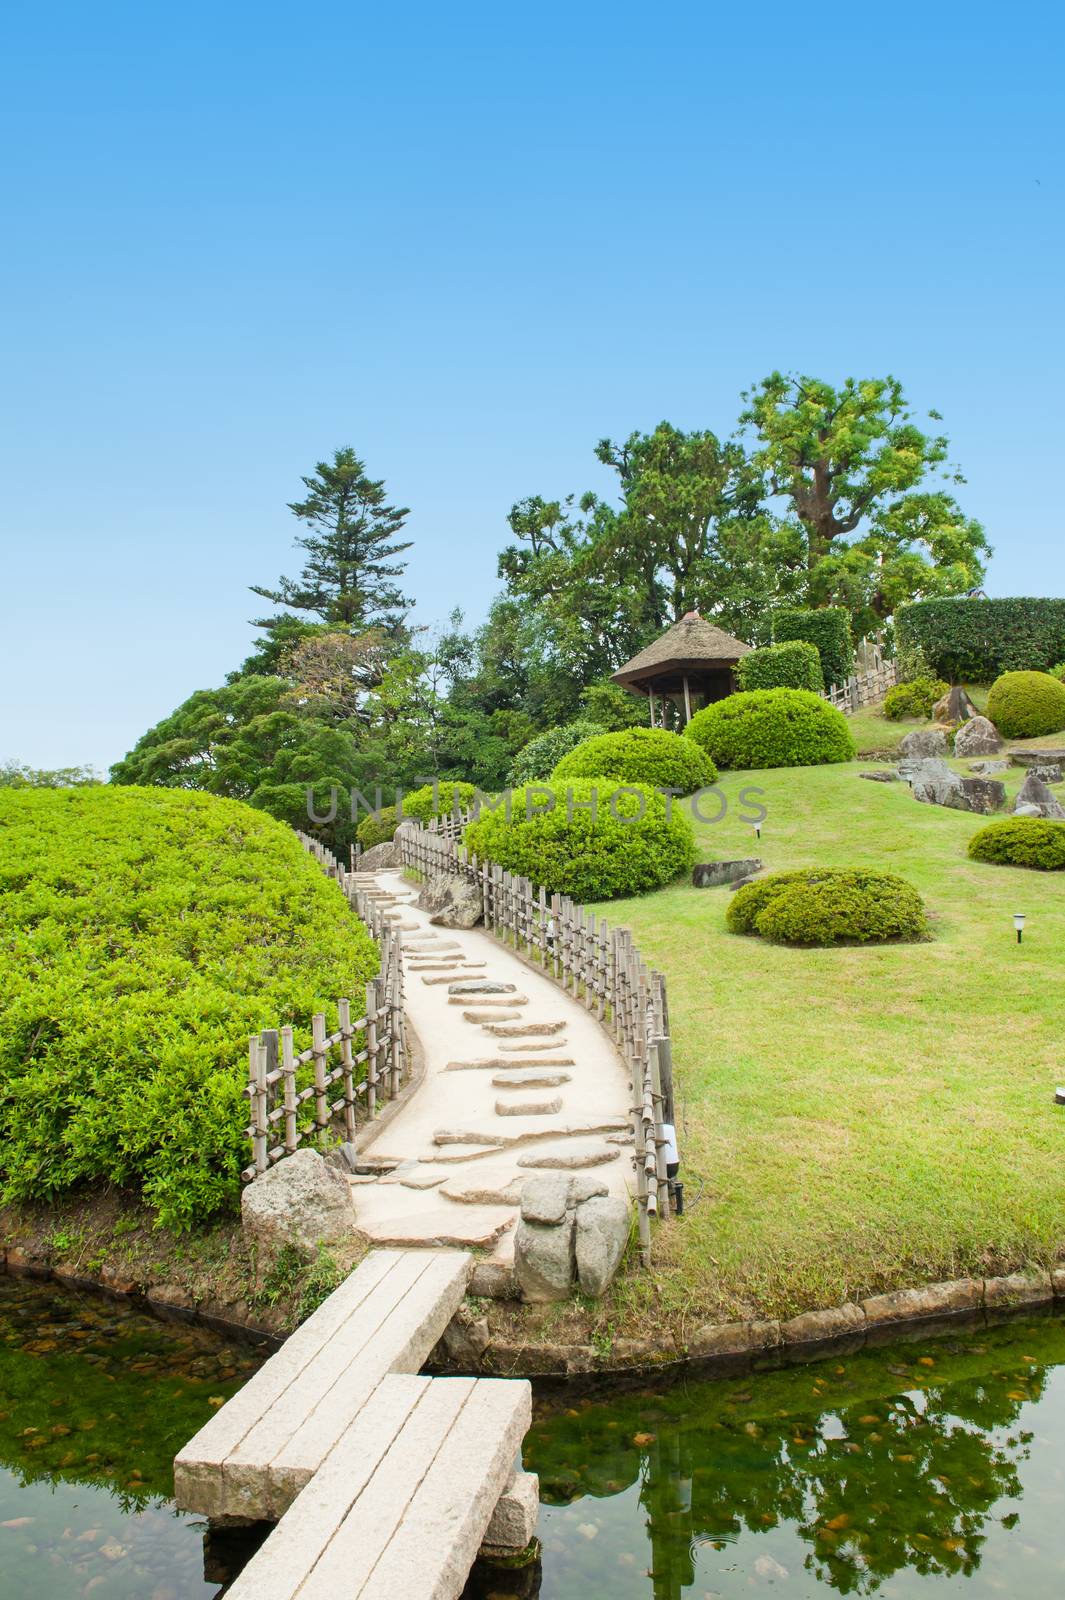 Zen wooden path in a Japanese Garden